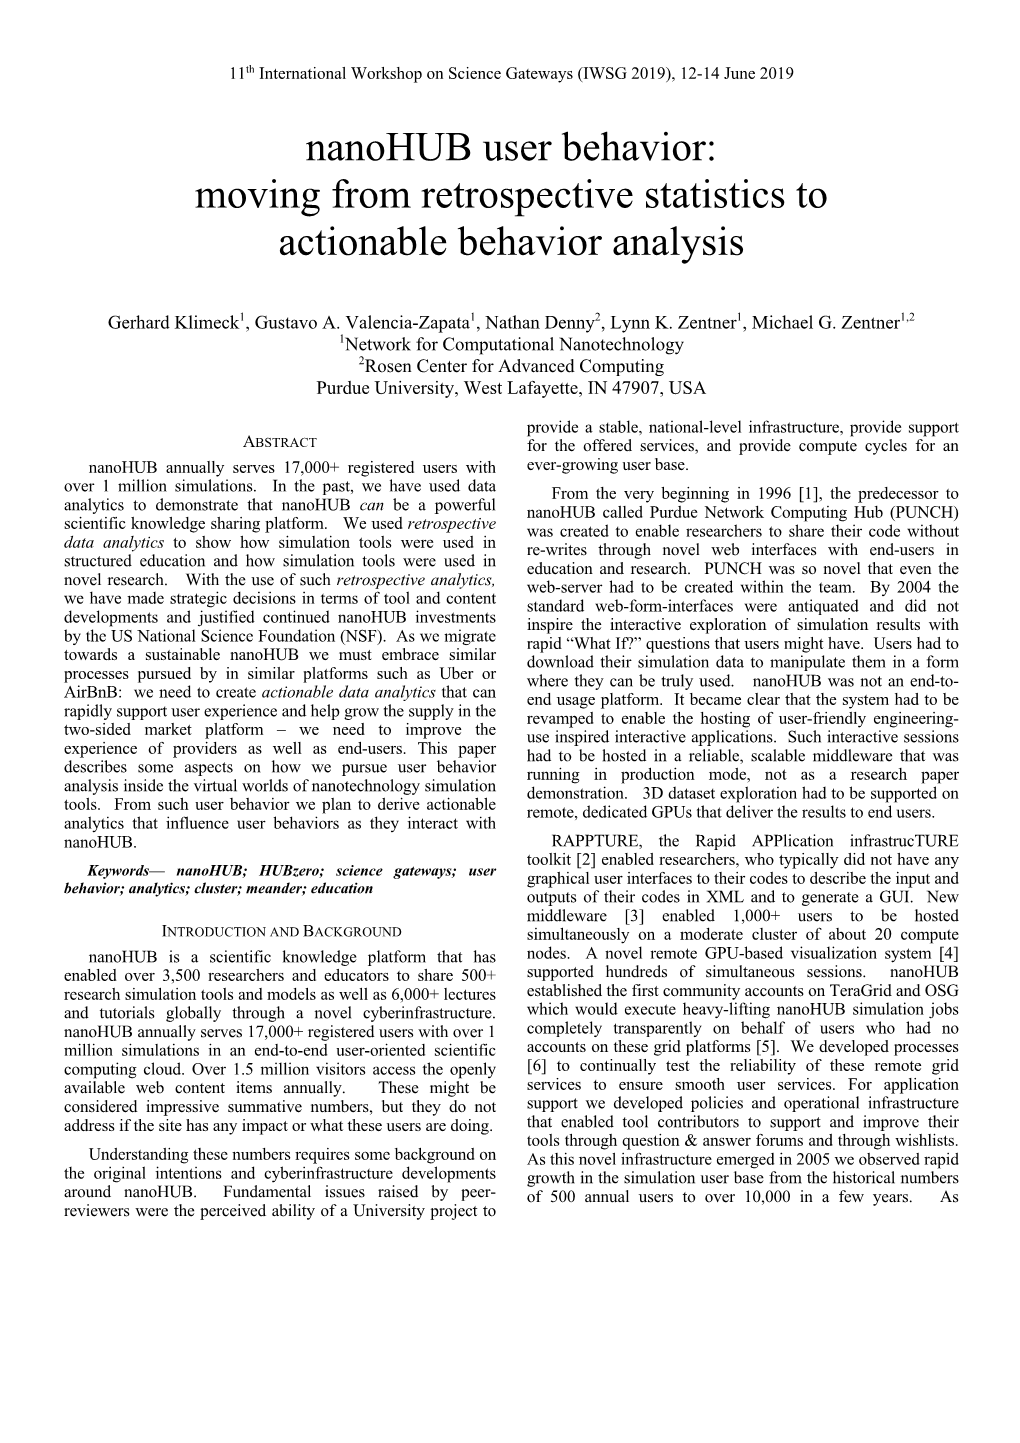 Nanohub User Behavior: Moving from Retrospective Statistics to Actionable Behavior Analysis